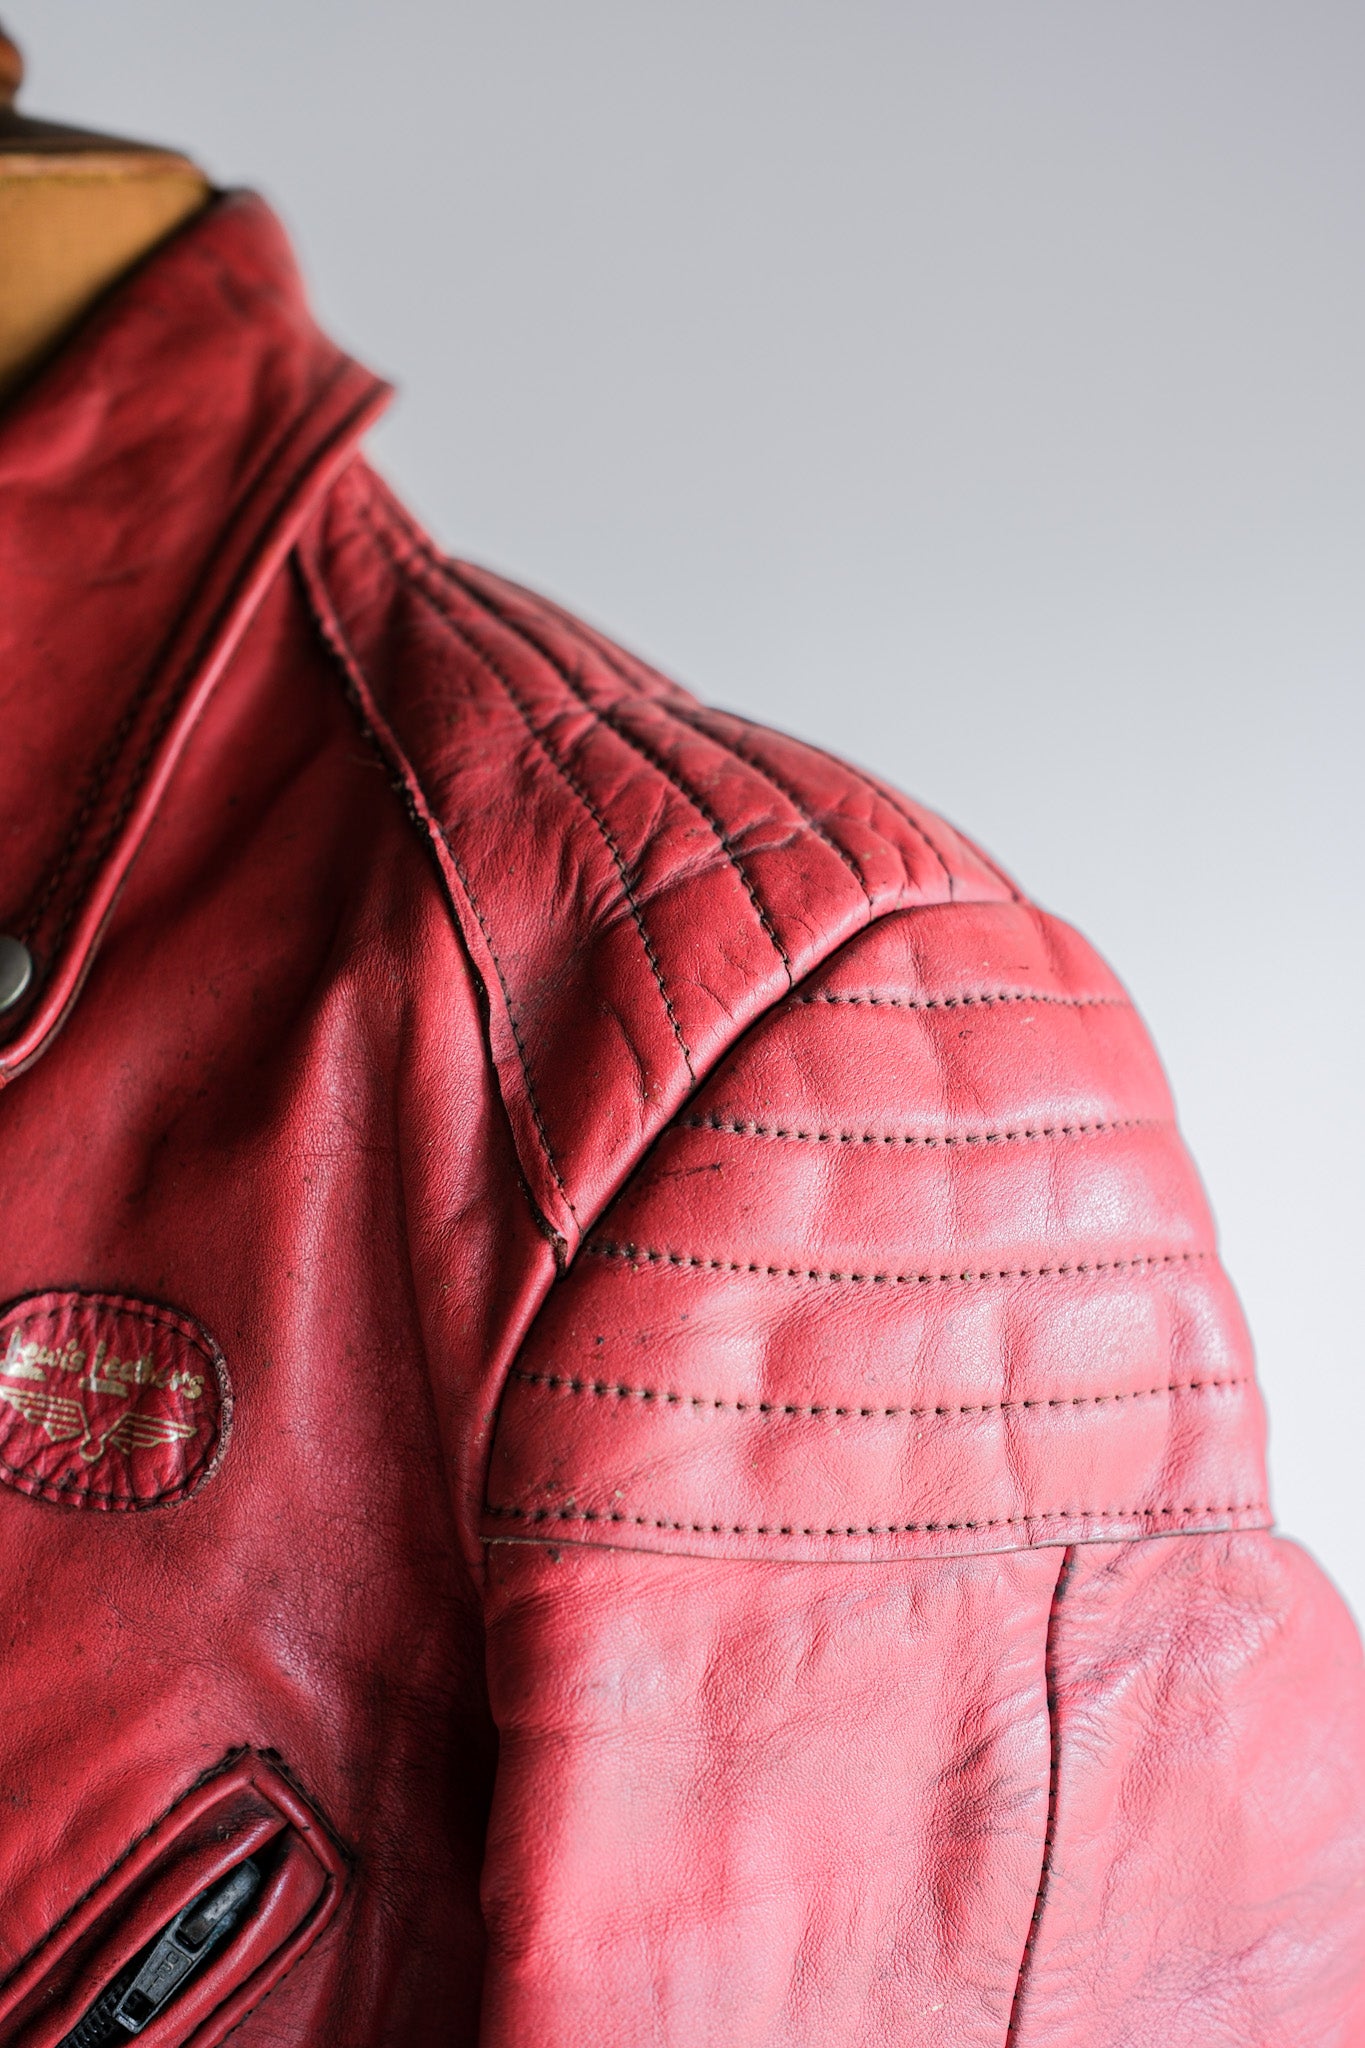 [~ 70's] Vintage Lewis Leathers Red Leather Riders Taille de la veste.40 "Europe"